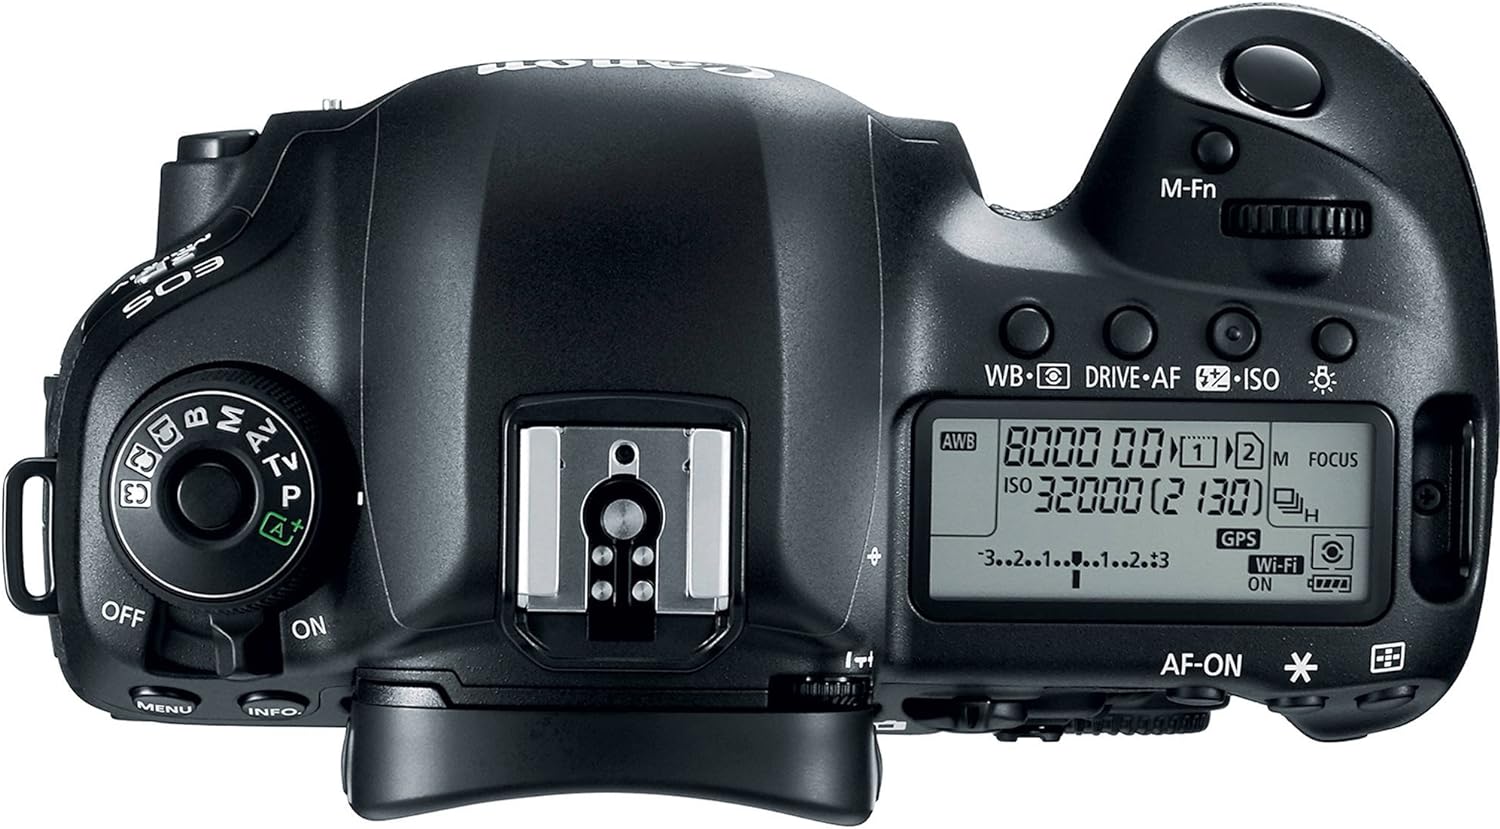 Canon EOS 5D Mark IV DSLR Camera: A Powerful Photography Tool